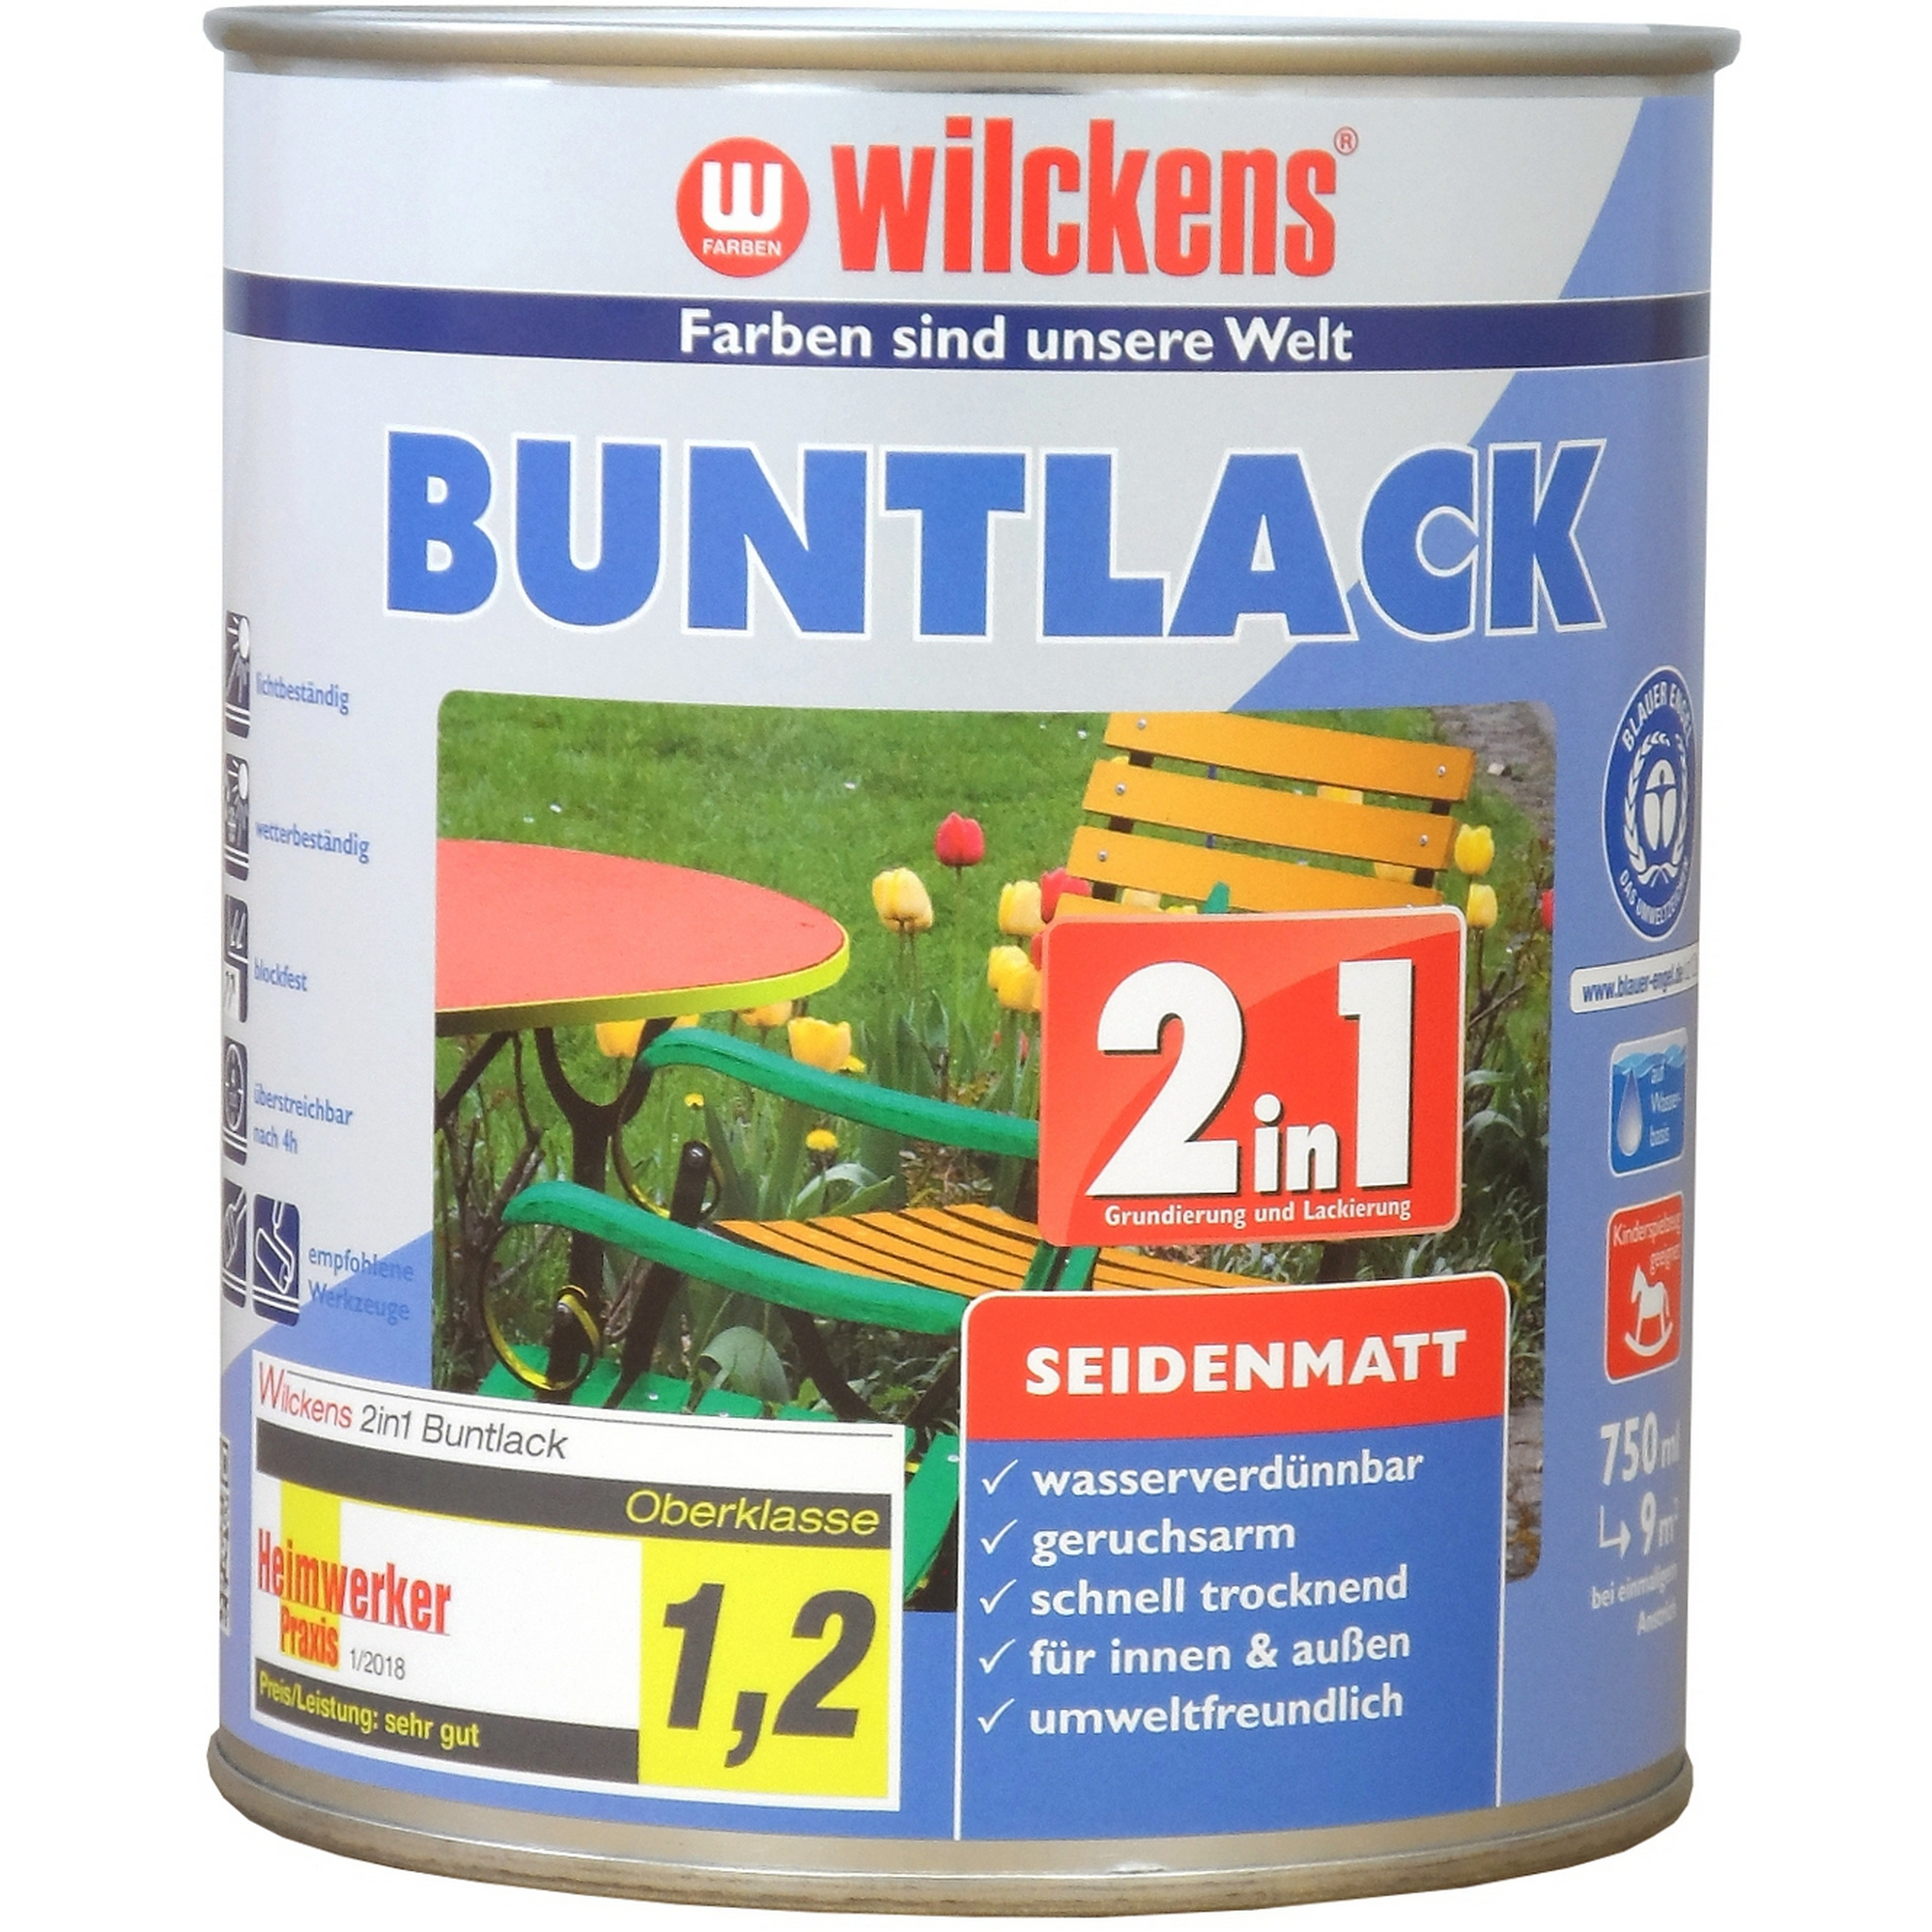 2in1 Buntlack feuerrot seidenmatt 750 ml + product picture